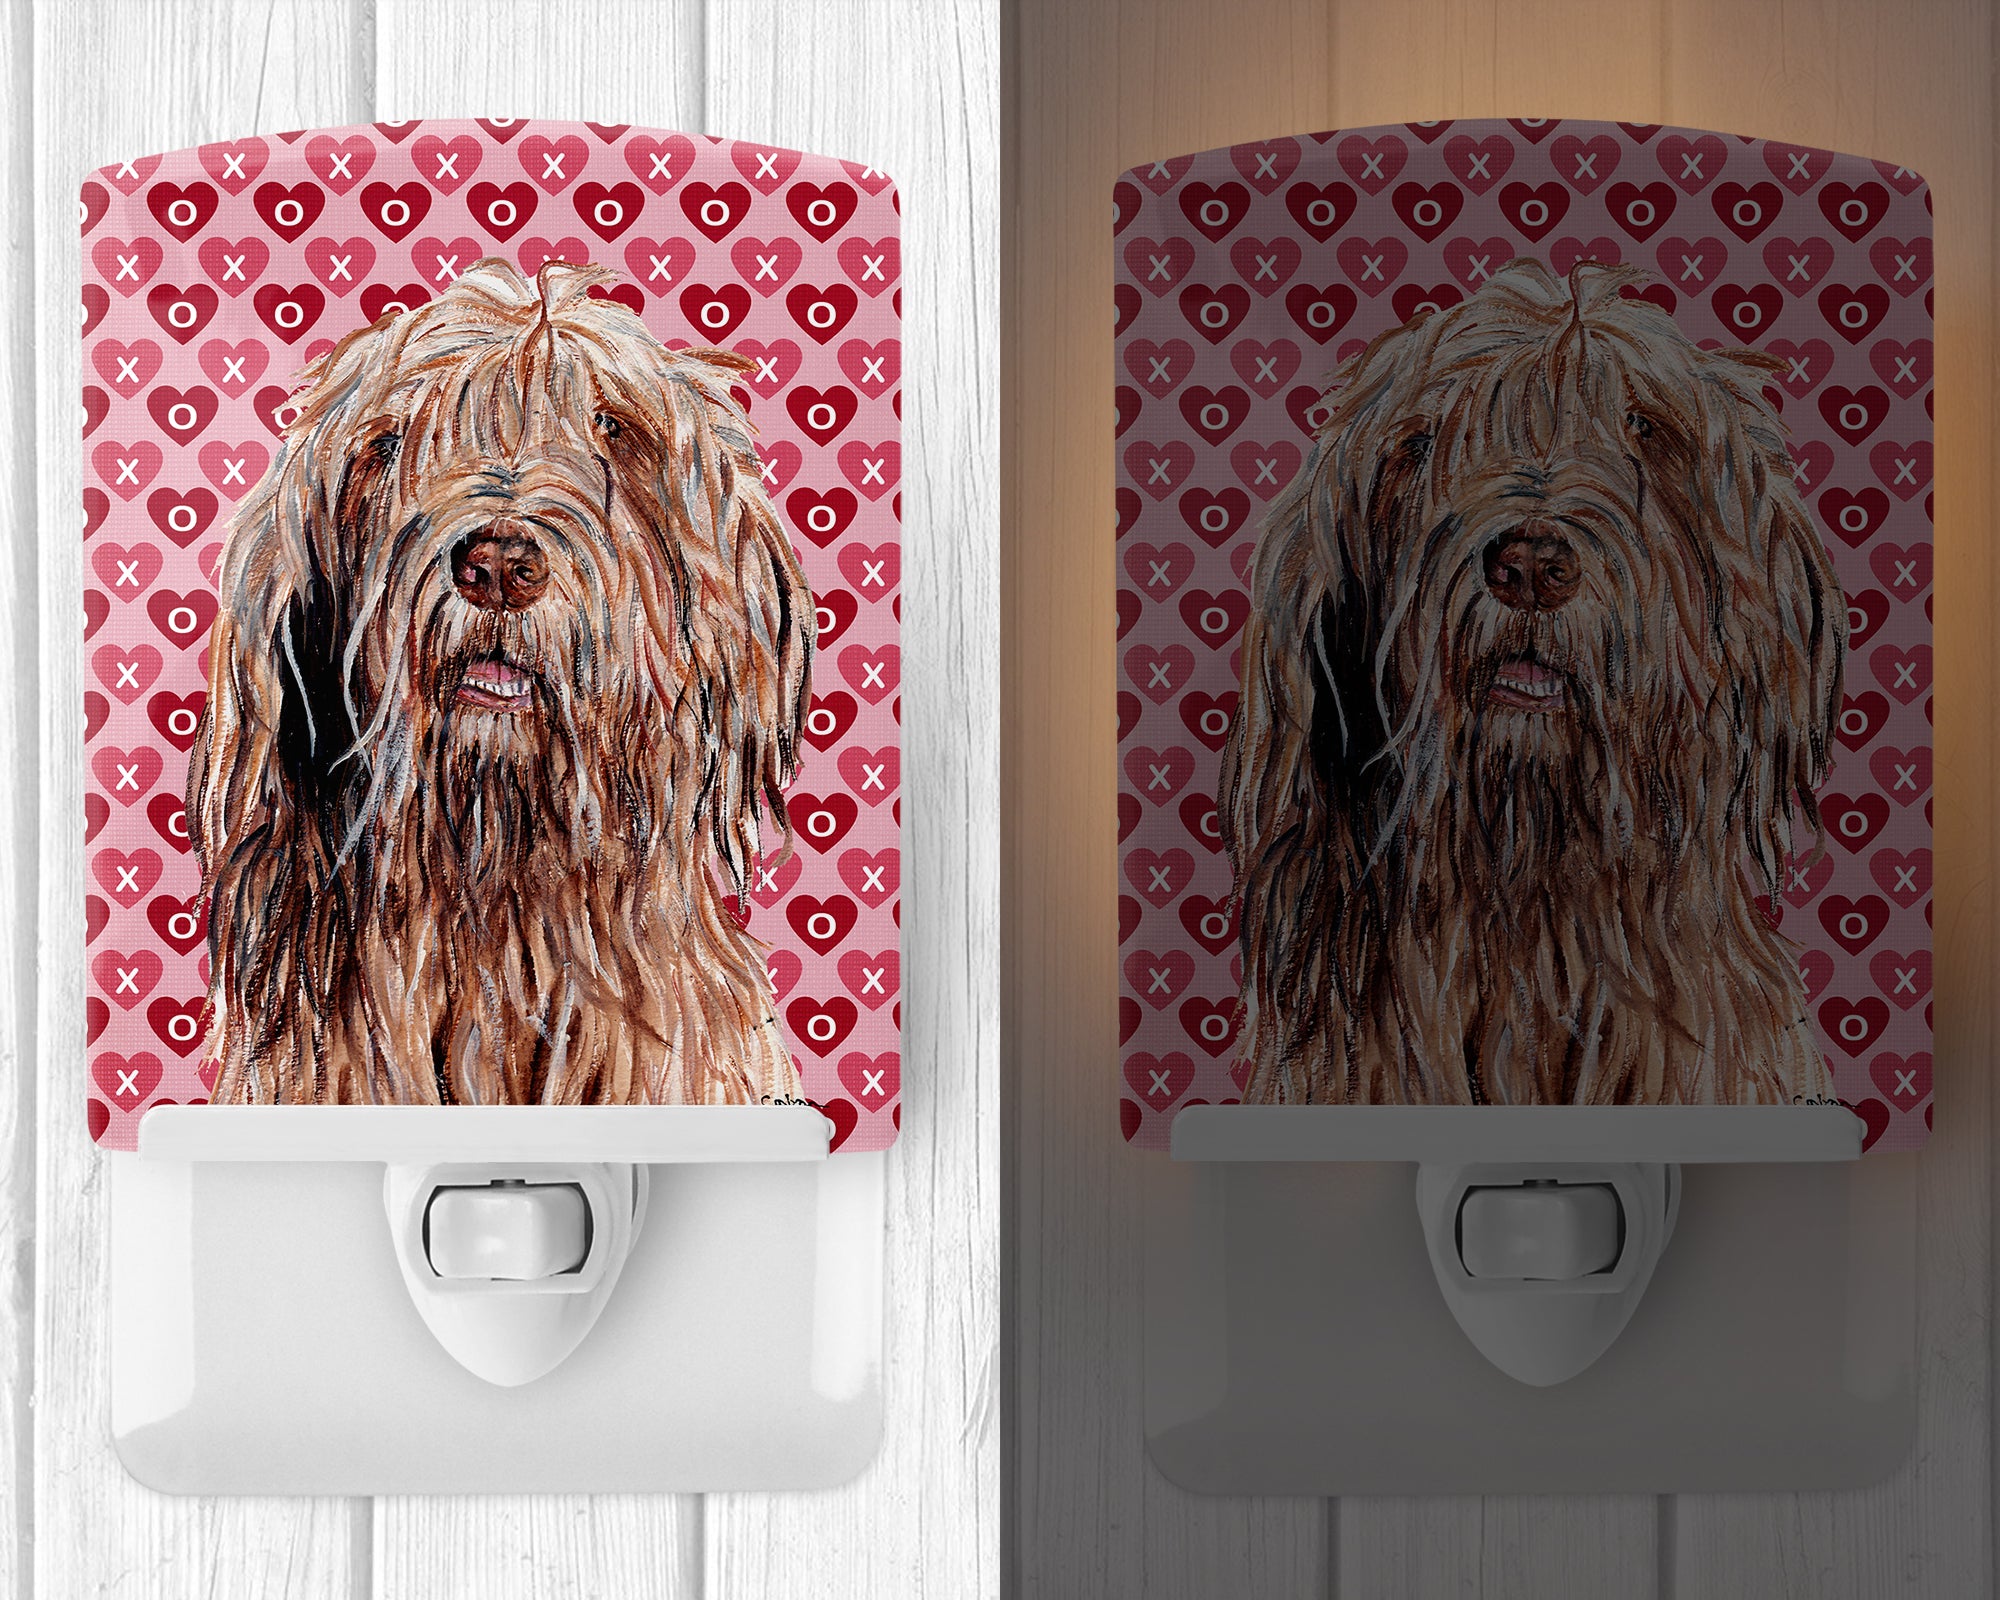 Otterhound Hearts and Love Ceramic Night Light SC9709CNL - the-store.com